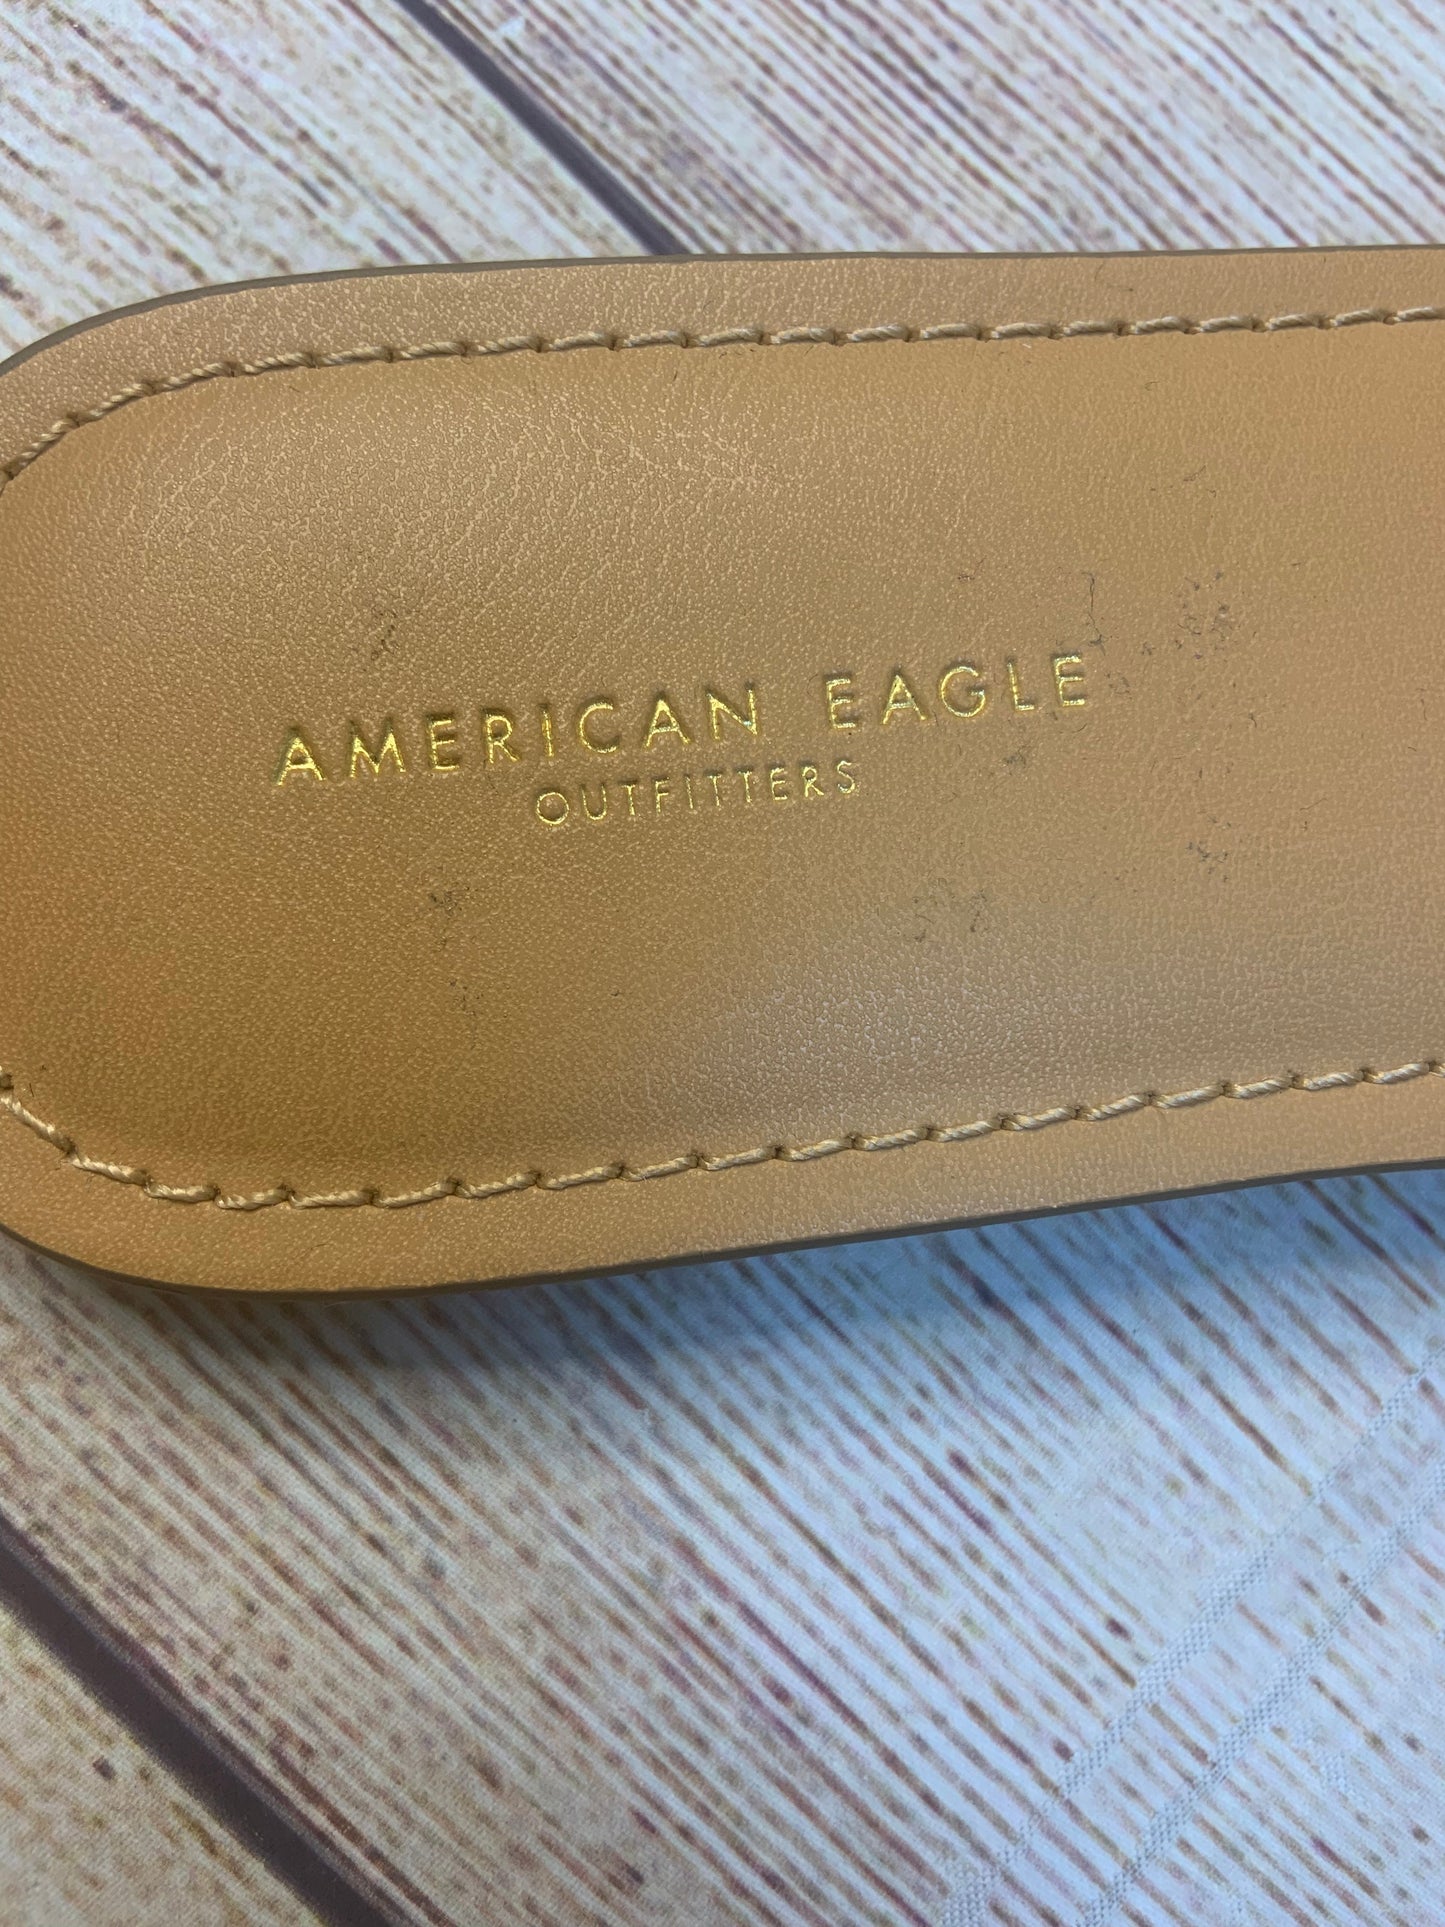 Sandals Flip Flops By American Eagle  Size: 7